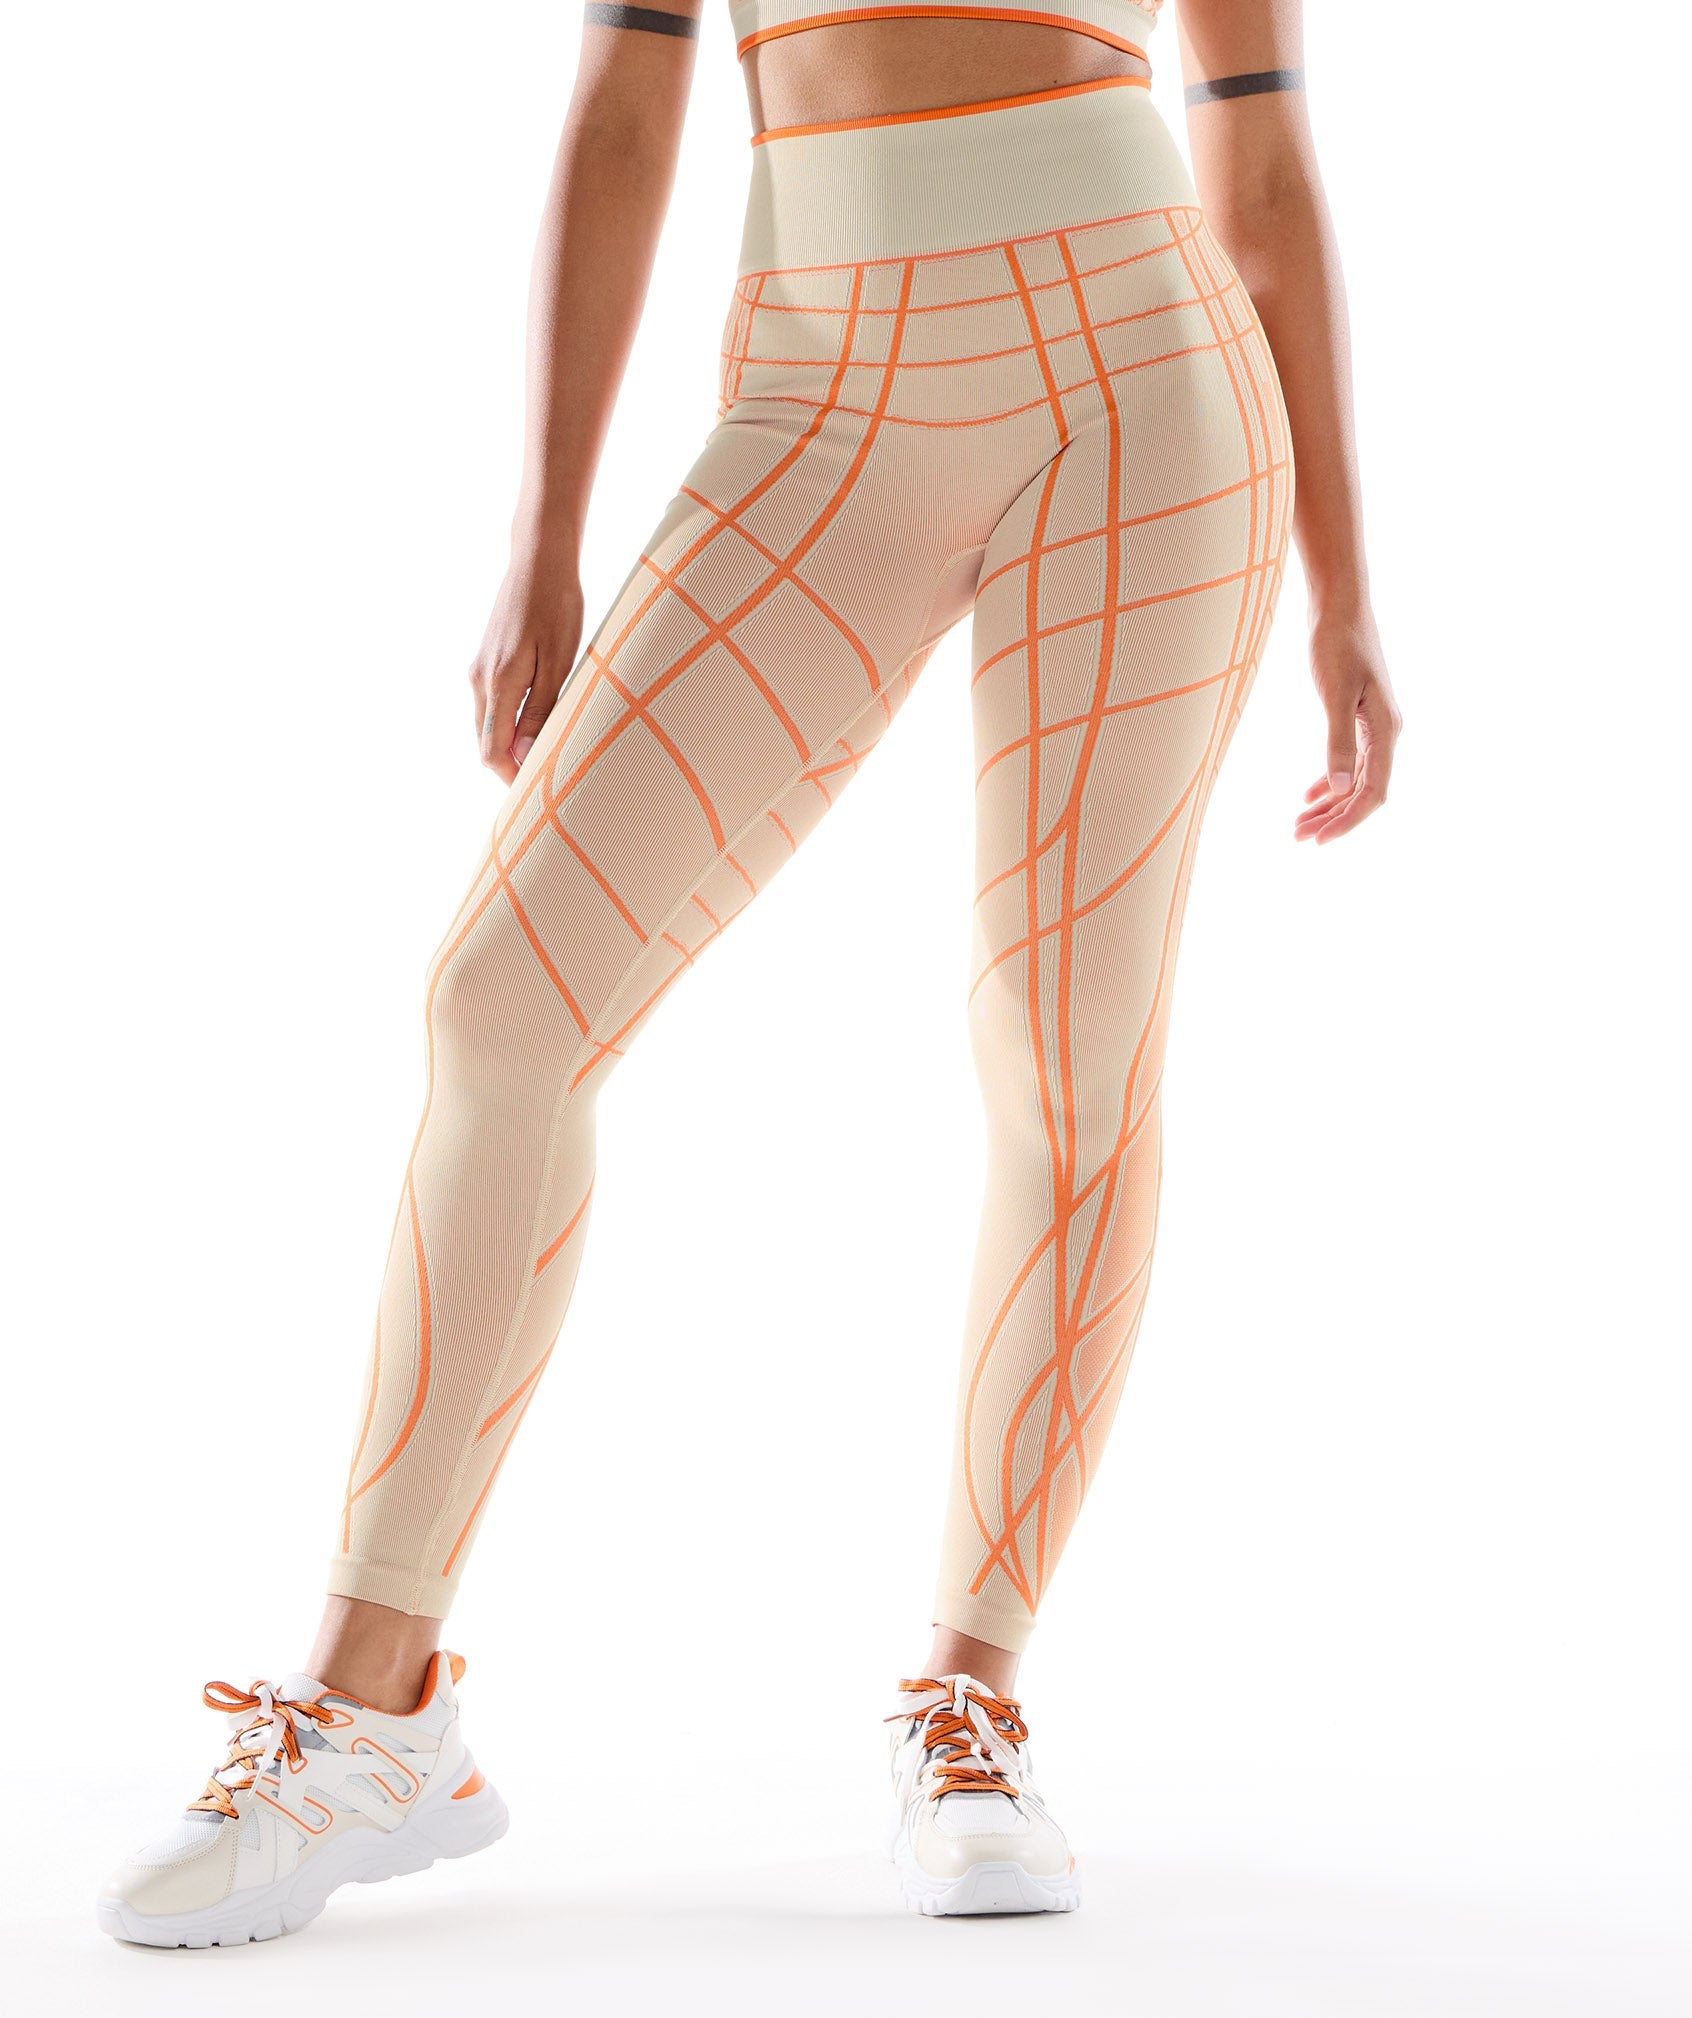 Wtflex Linear Seamless Leggings in Pebble Grey/Orange/Coconut White